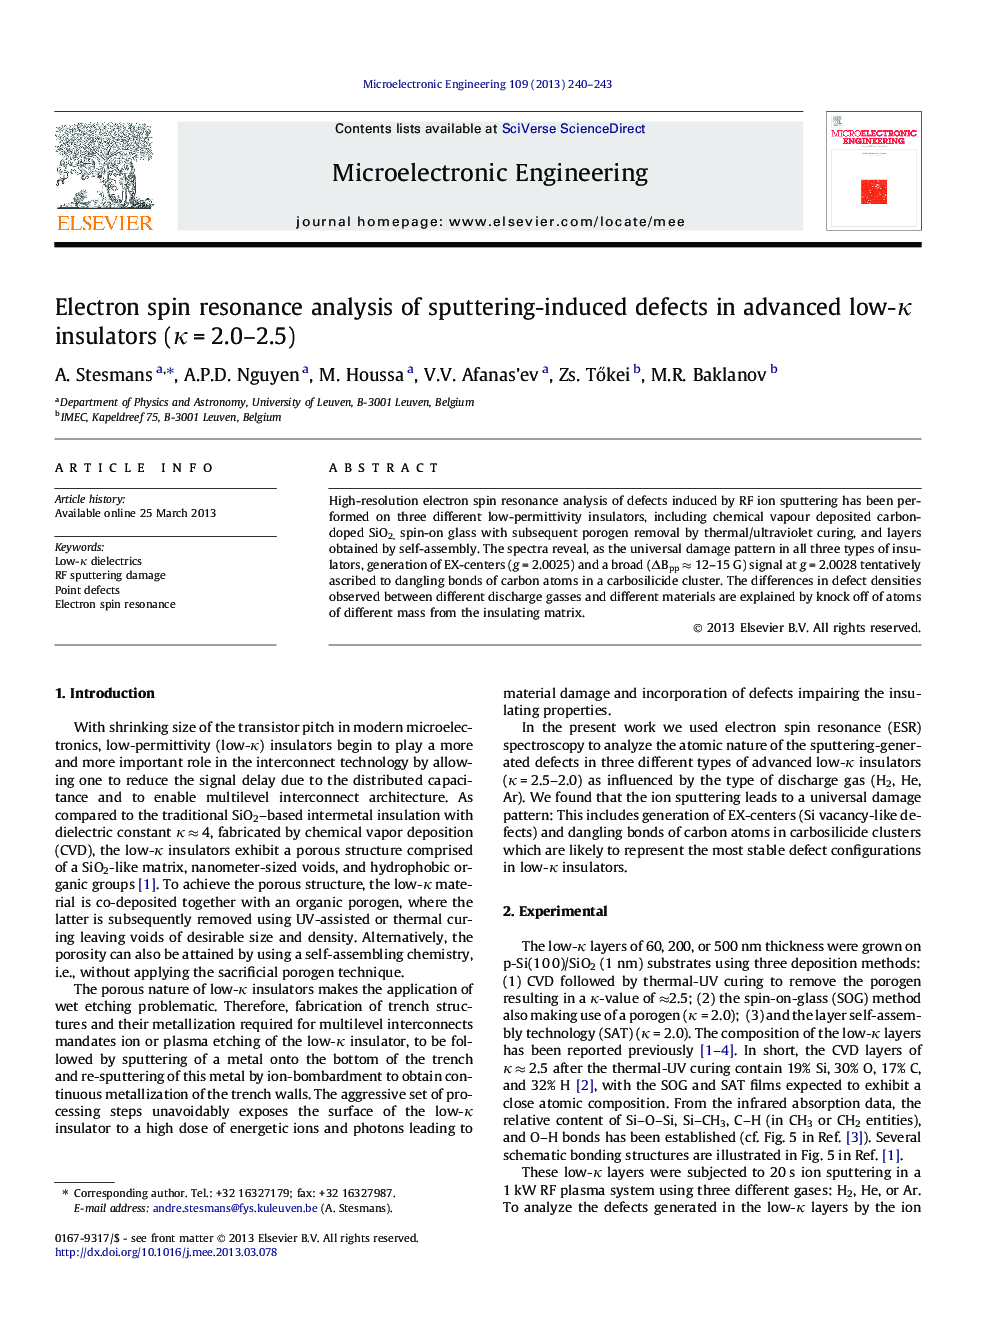 Electron spin resonance analysis of sputtering-induced defects in advanced low-Îº insulators (ÎºÂ =Â 2.0-2.5)